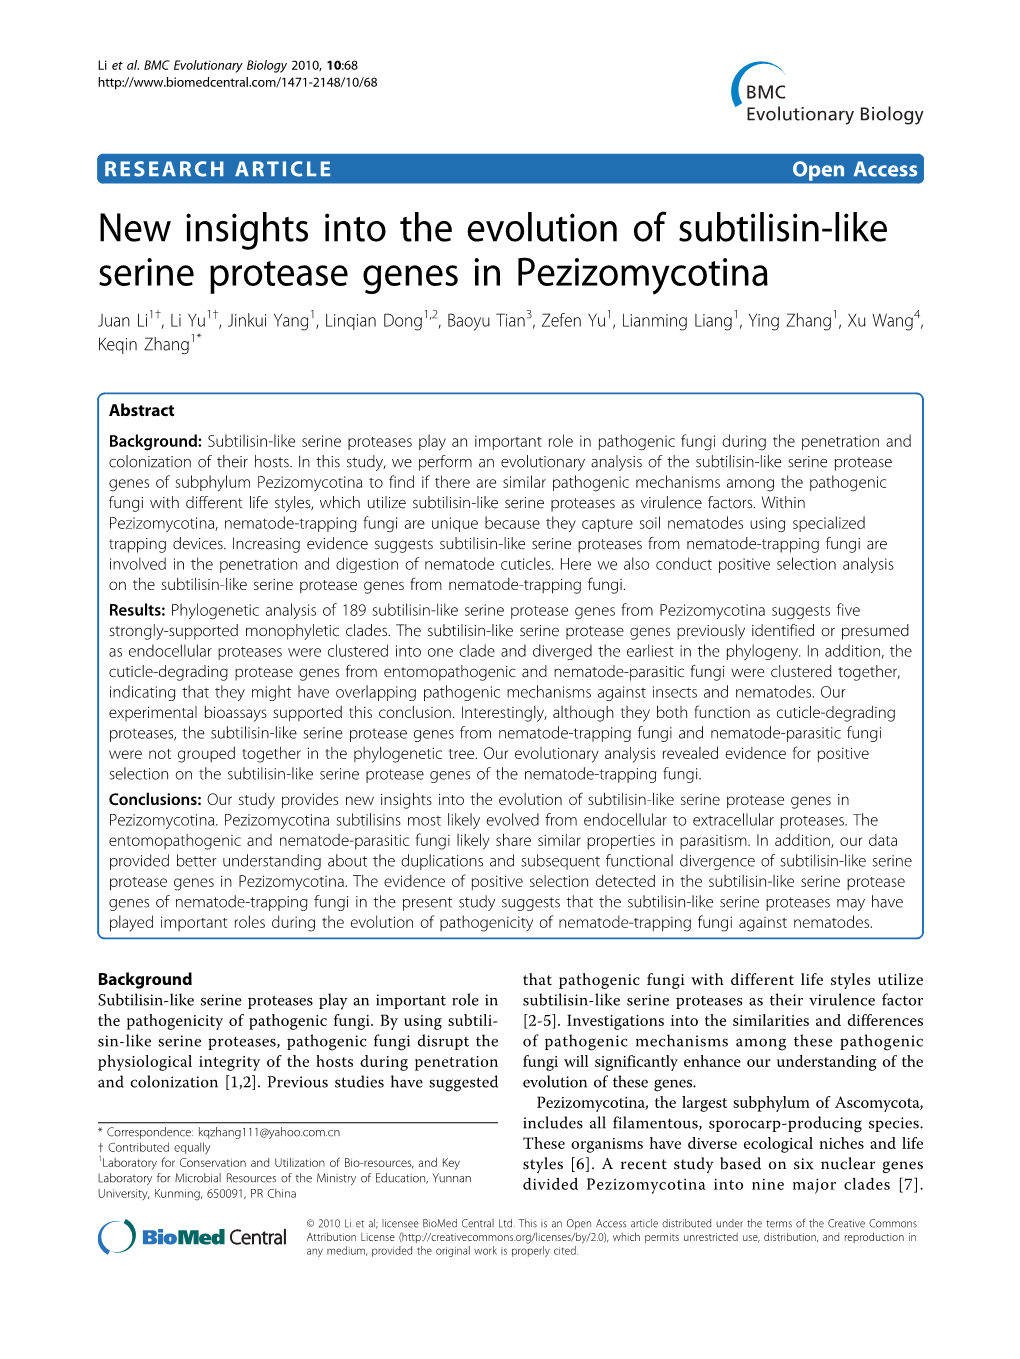 New Insights Into the Evolution of Subtilisin-Like Serine Protease